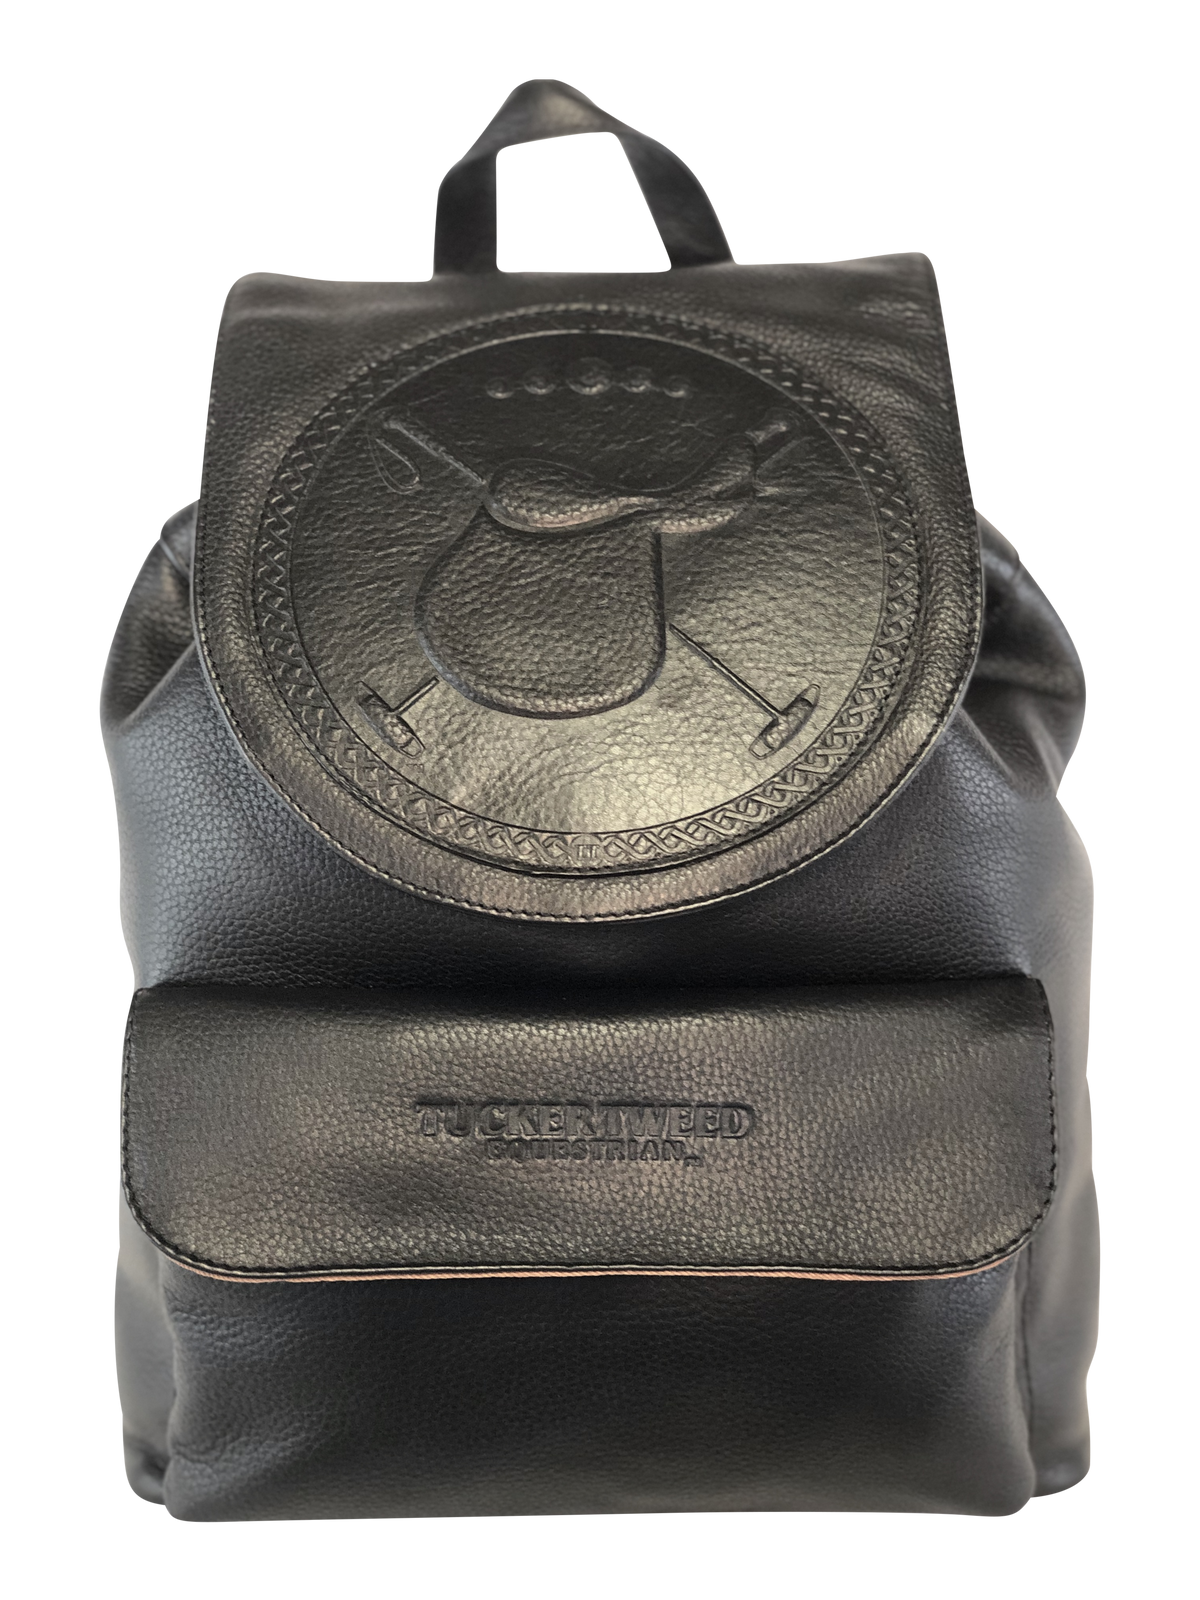 Tucker Tweed Equestrian Leather Handbags Polo Black Brandywine Backpack: Polo